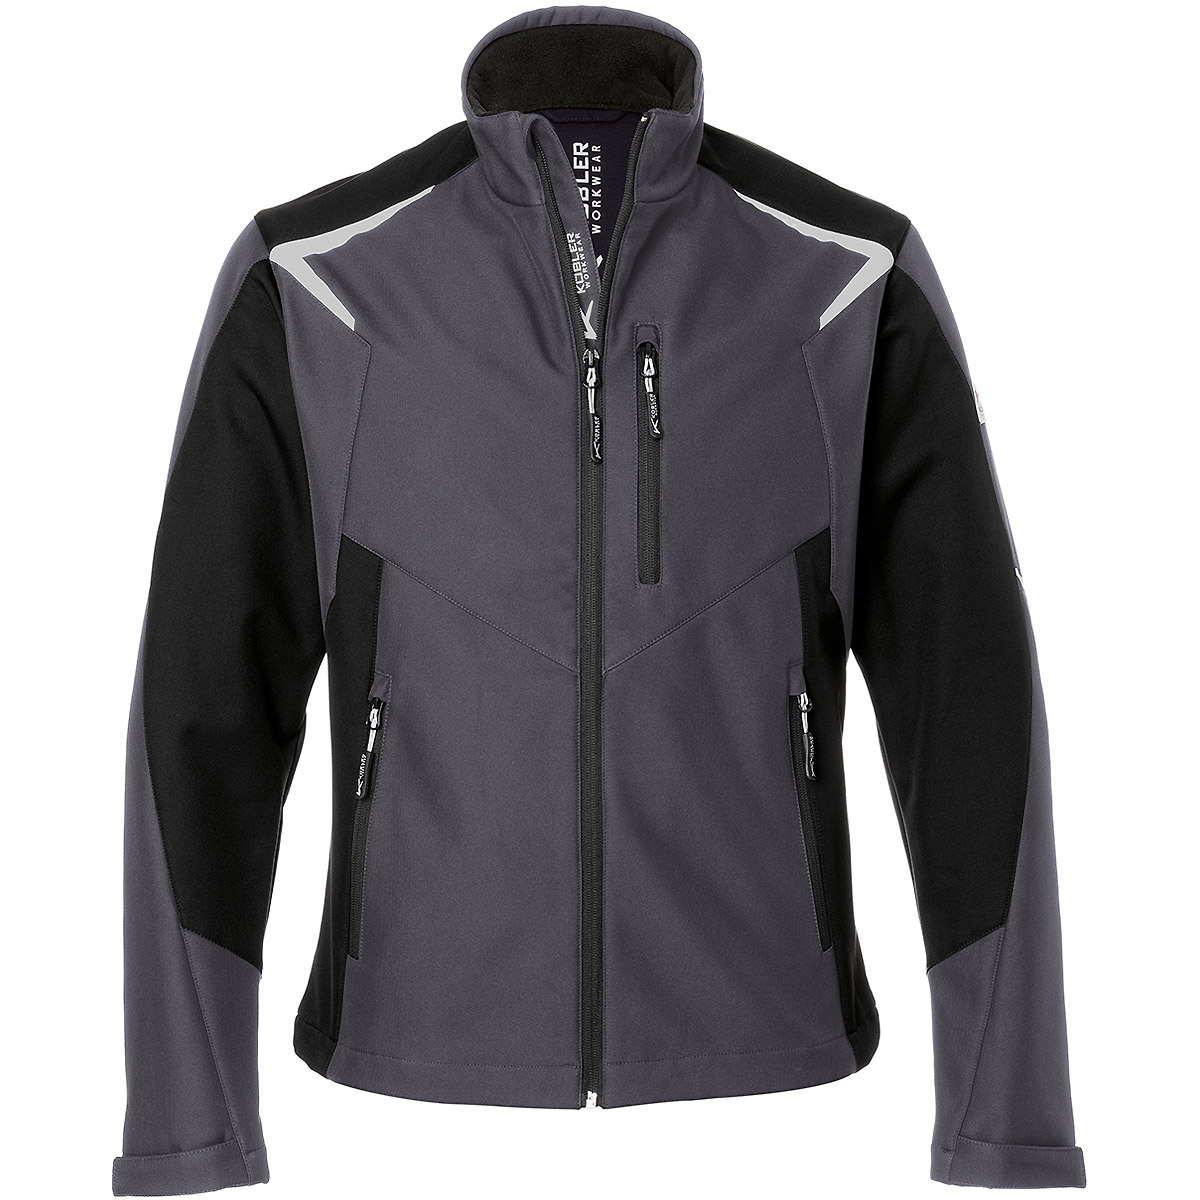 KÜBLER BODYFORCE Ultrashell Jacke | Softshelljacken | Jacken |  Arbeitskleidung | Arbeitsschutz | tuulzone